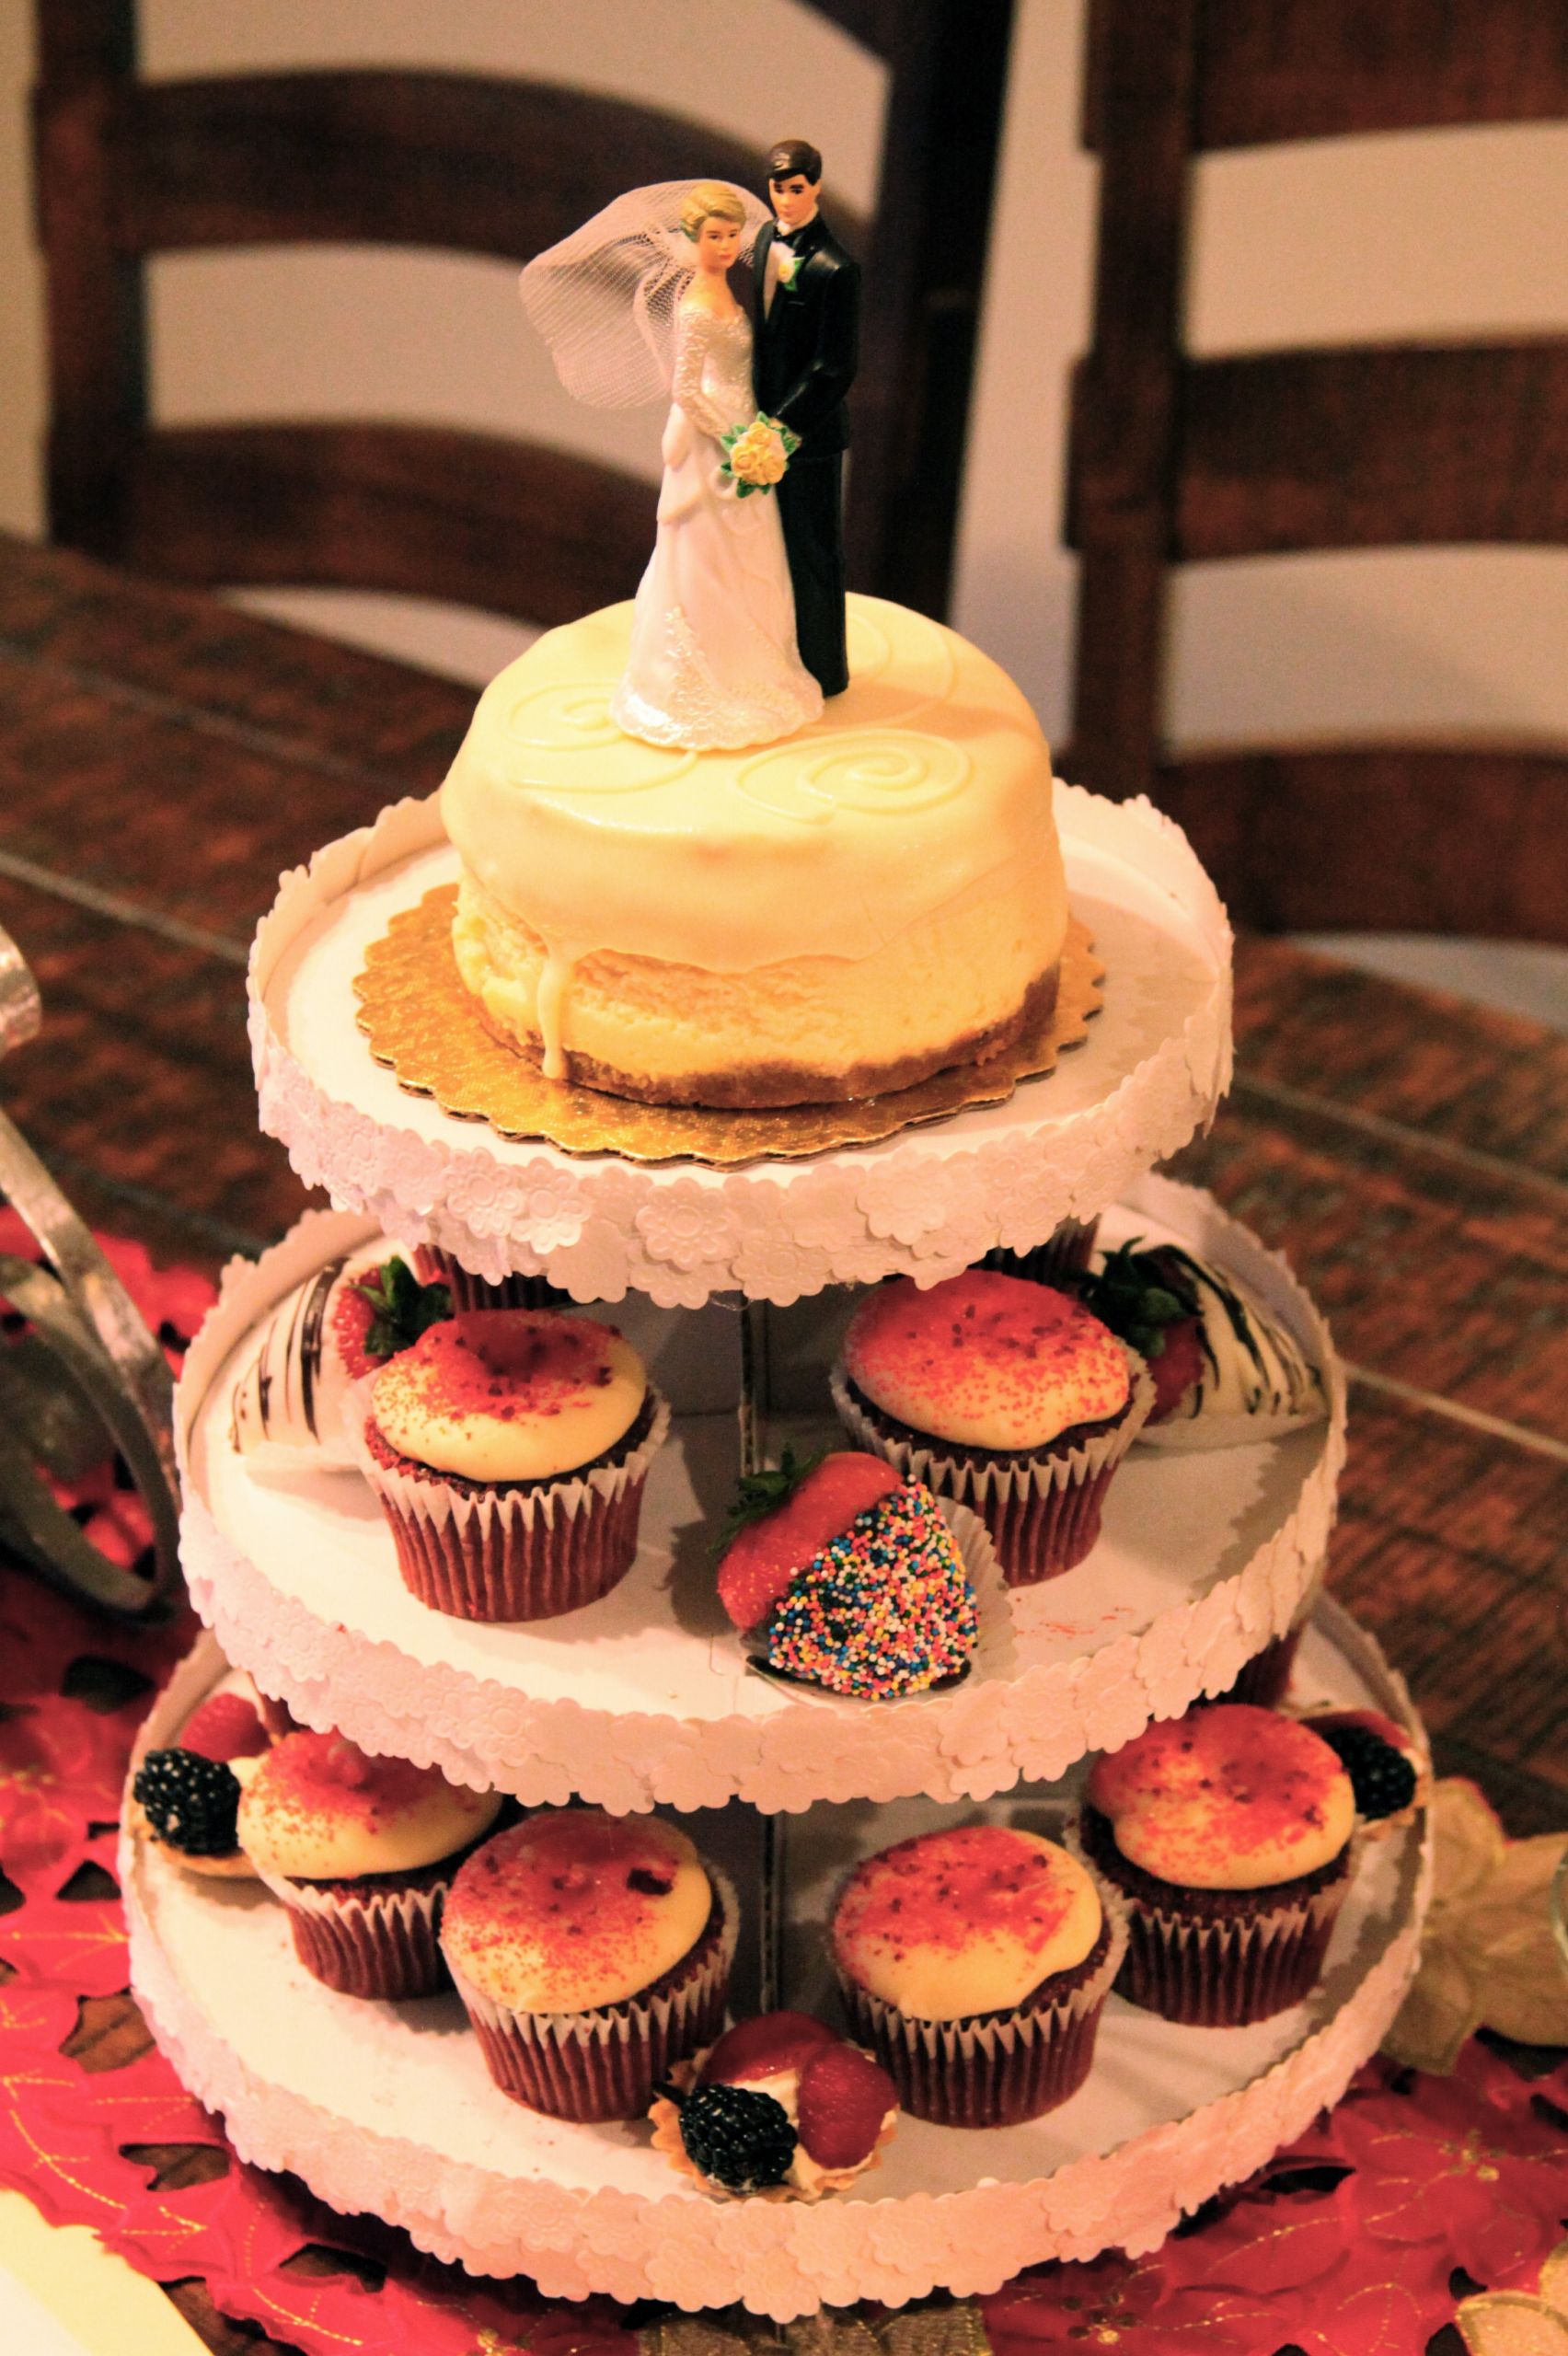 Do It Yourself Wedding Cakes
 “Wedding Cake Design” Do it yourself By Kathleen Heady